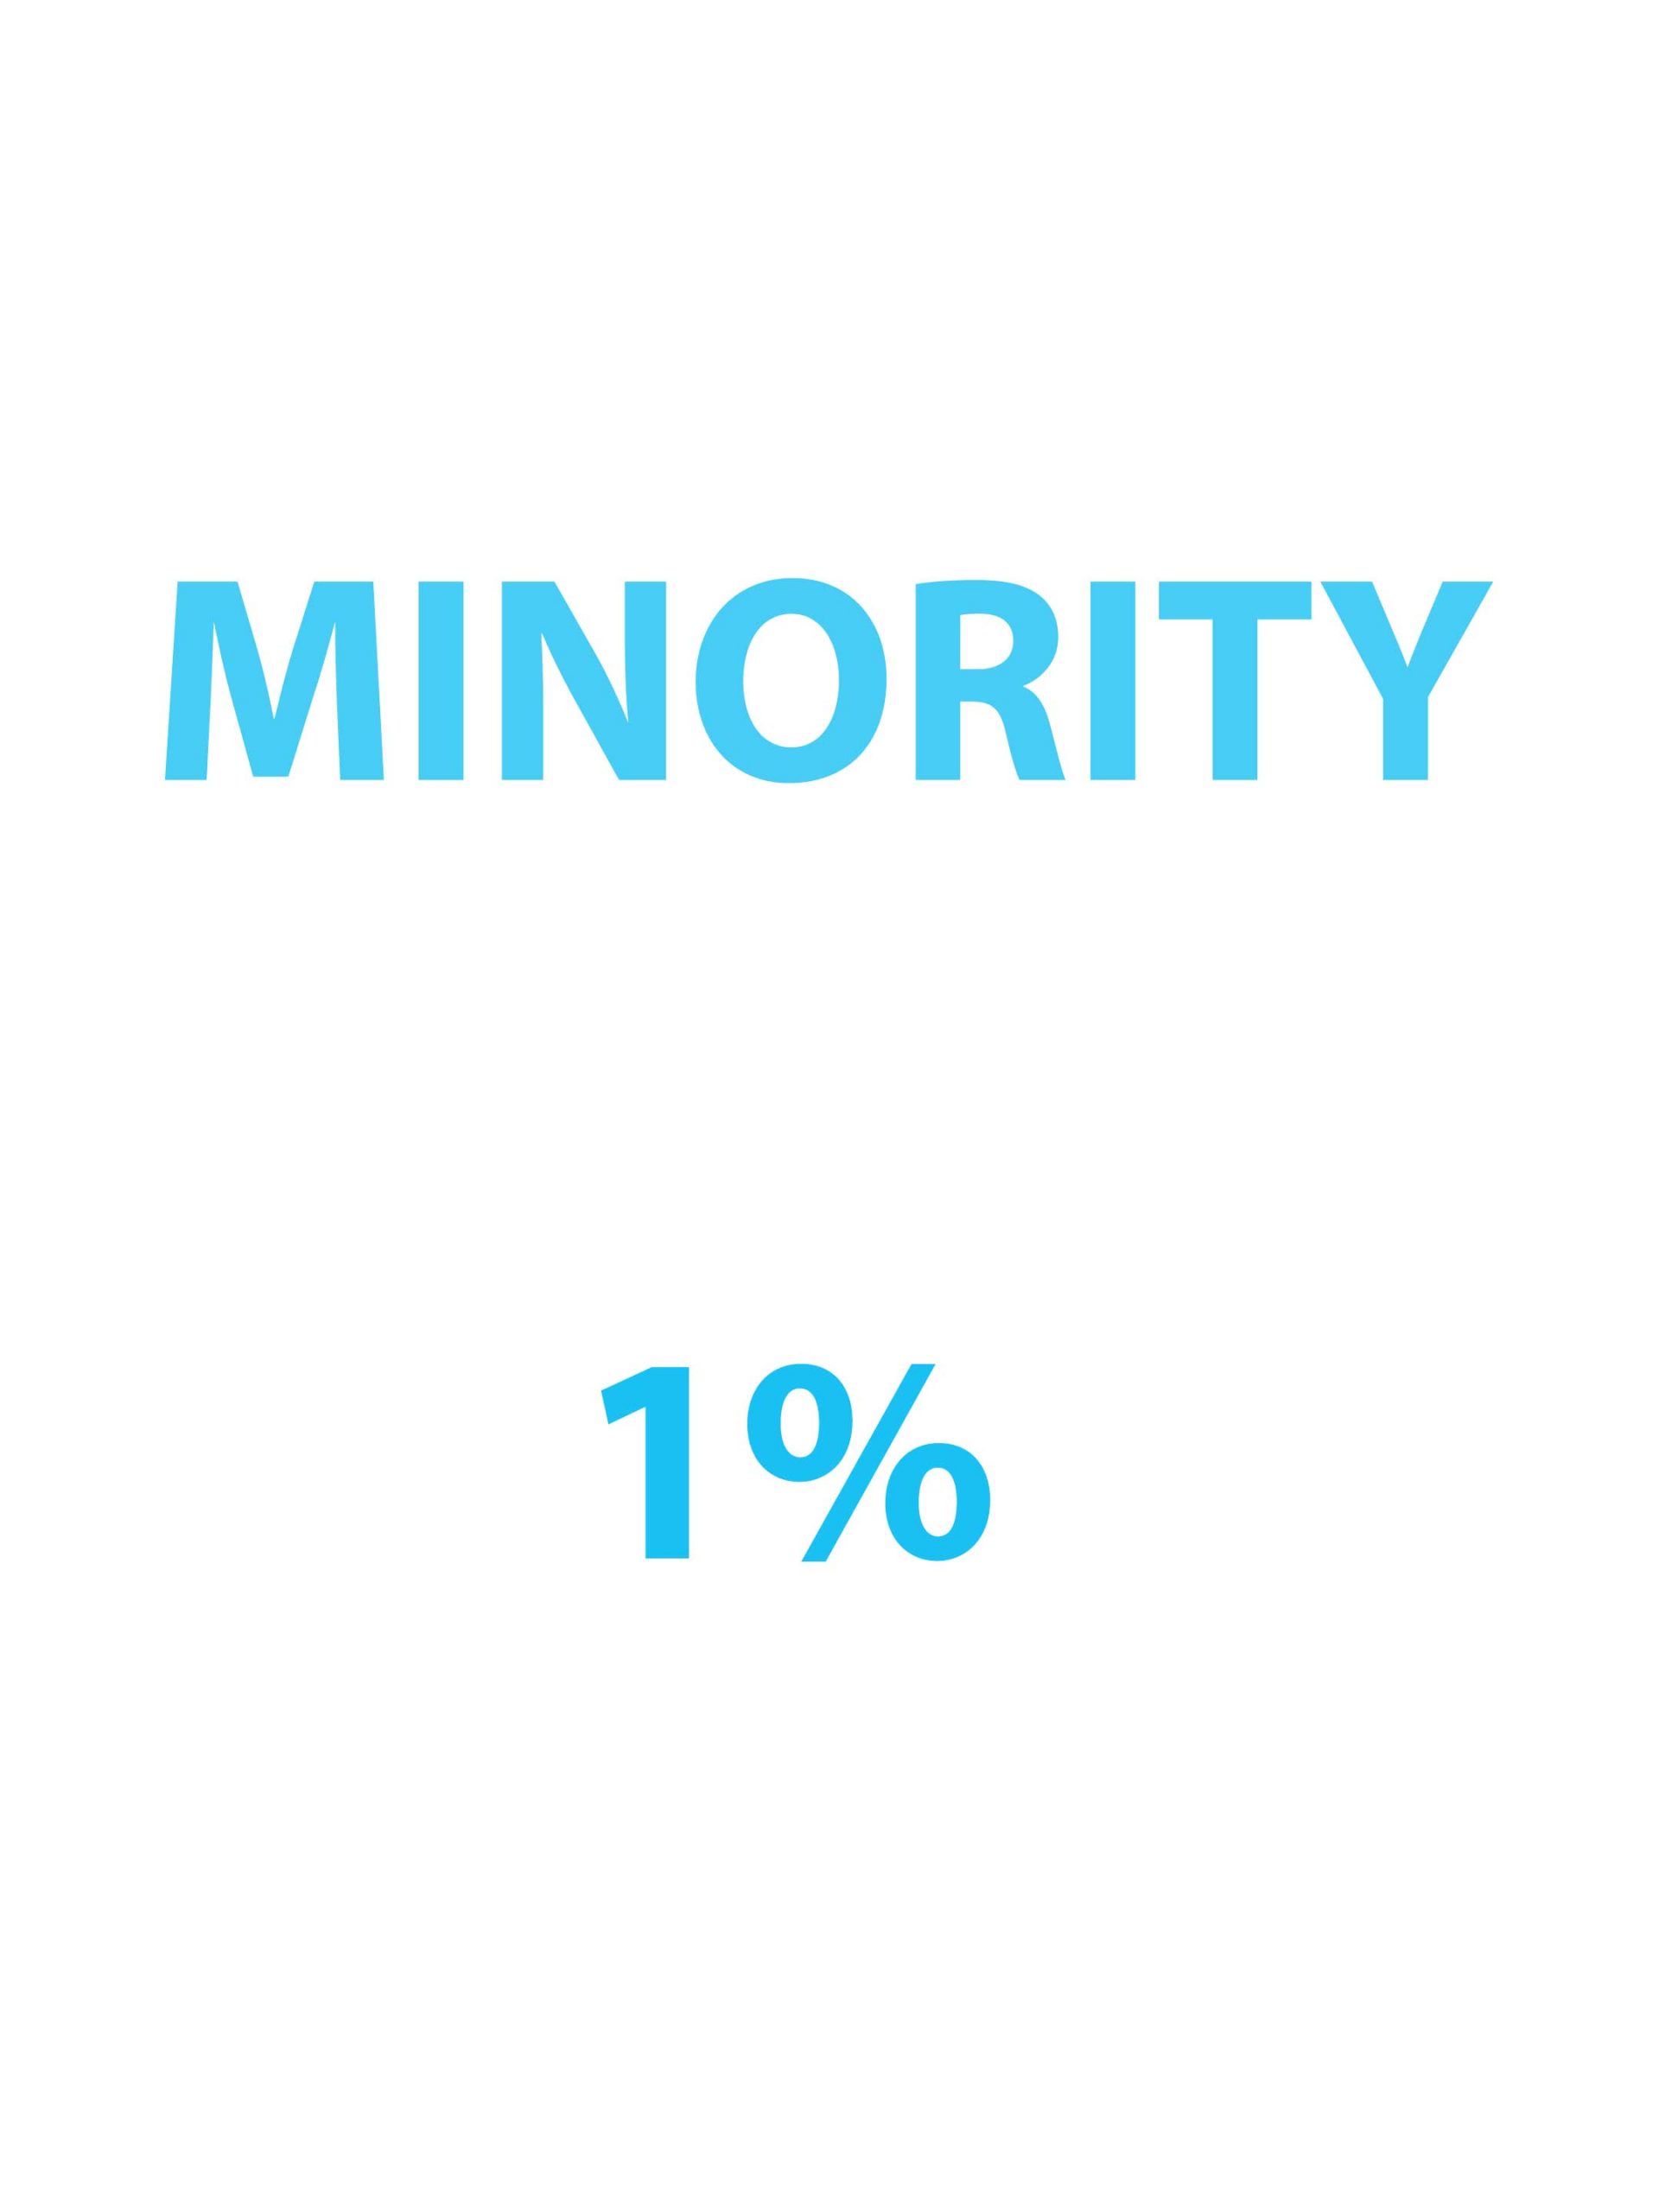 Illustration of word Minority 1% by NFT Latinx/Womnx decolonizing artist